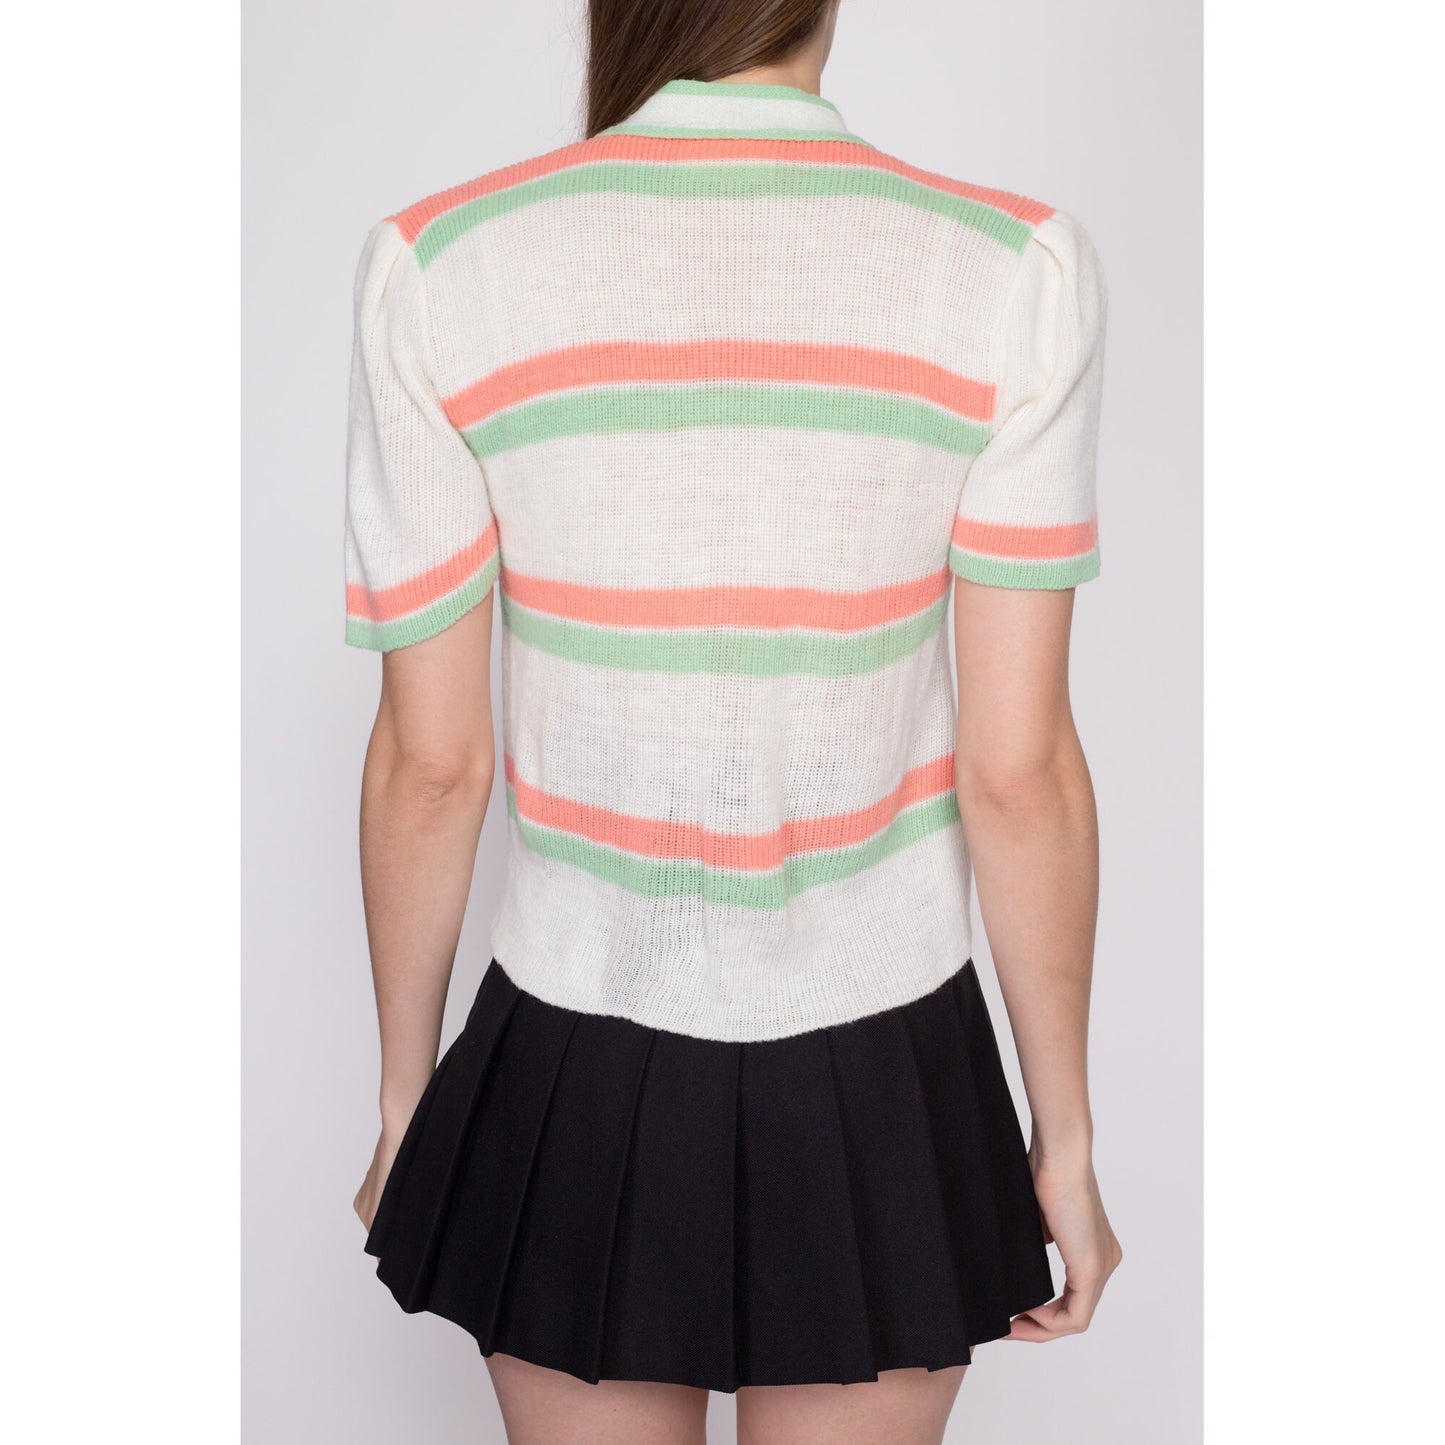 Medium 70s White Pastel Striped Knit Top | Boho Vintage Button Up Cropped Sweater Shirt